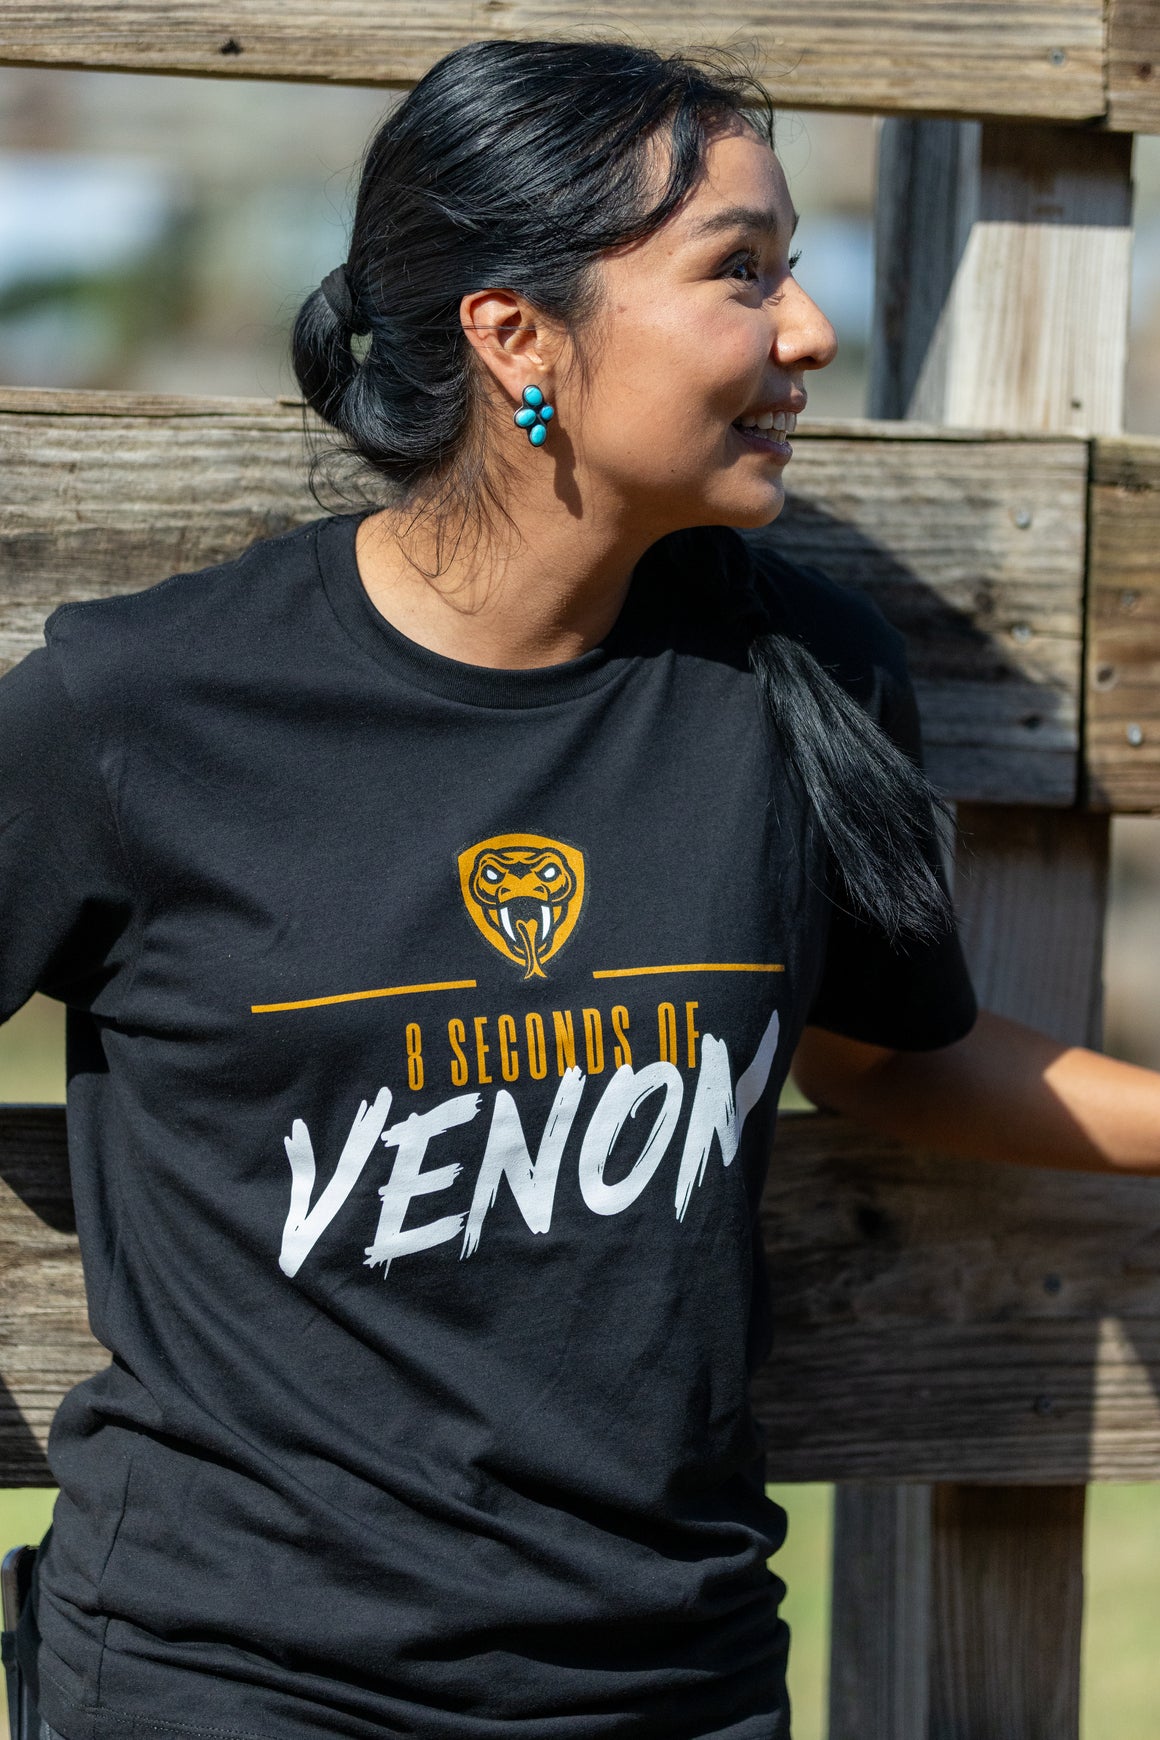 8 Seconds of Venom T-Shirt